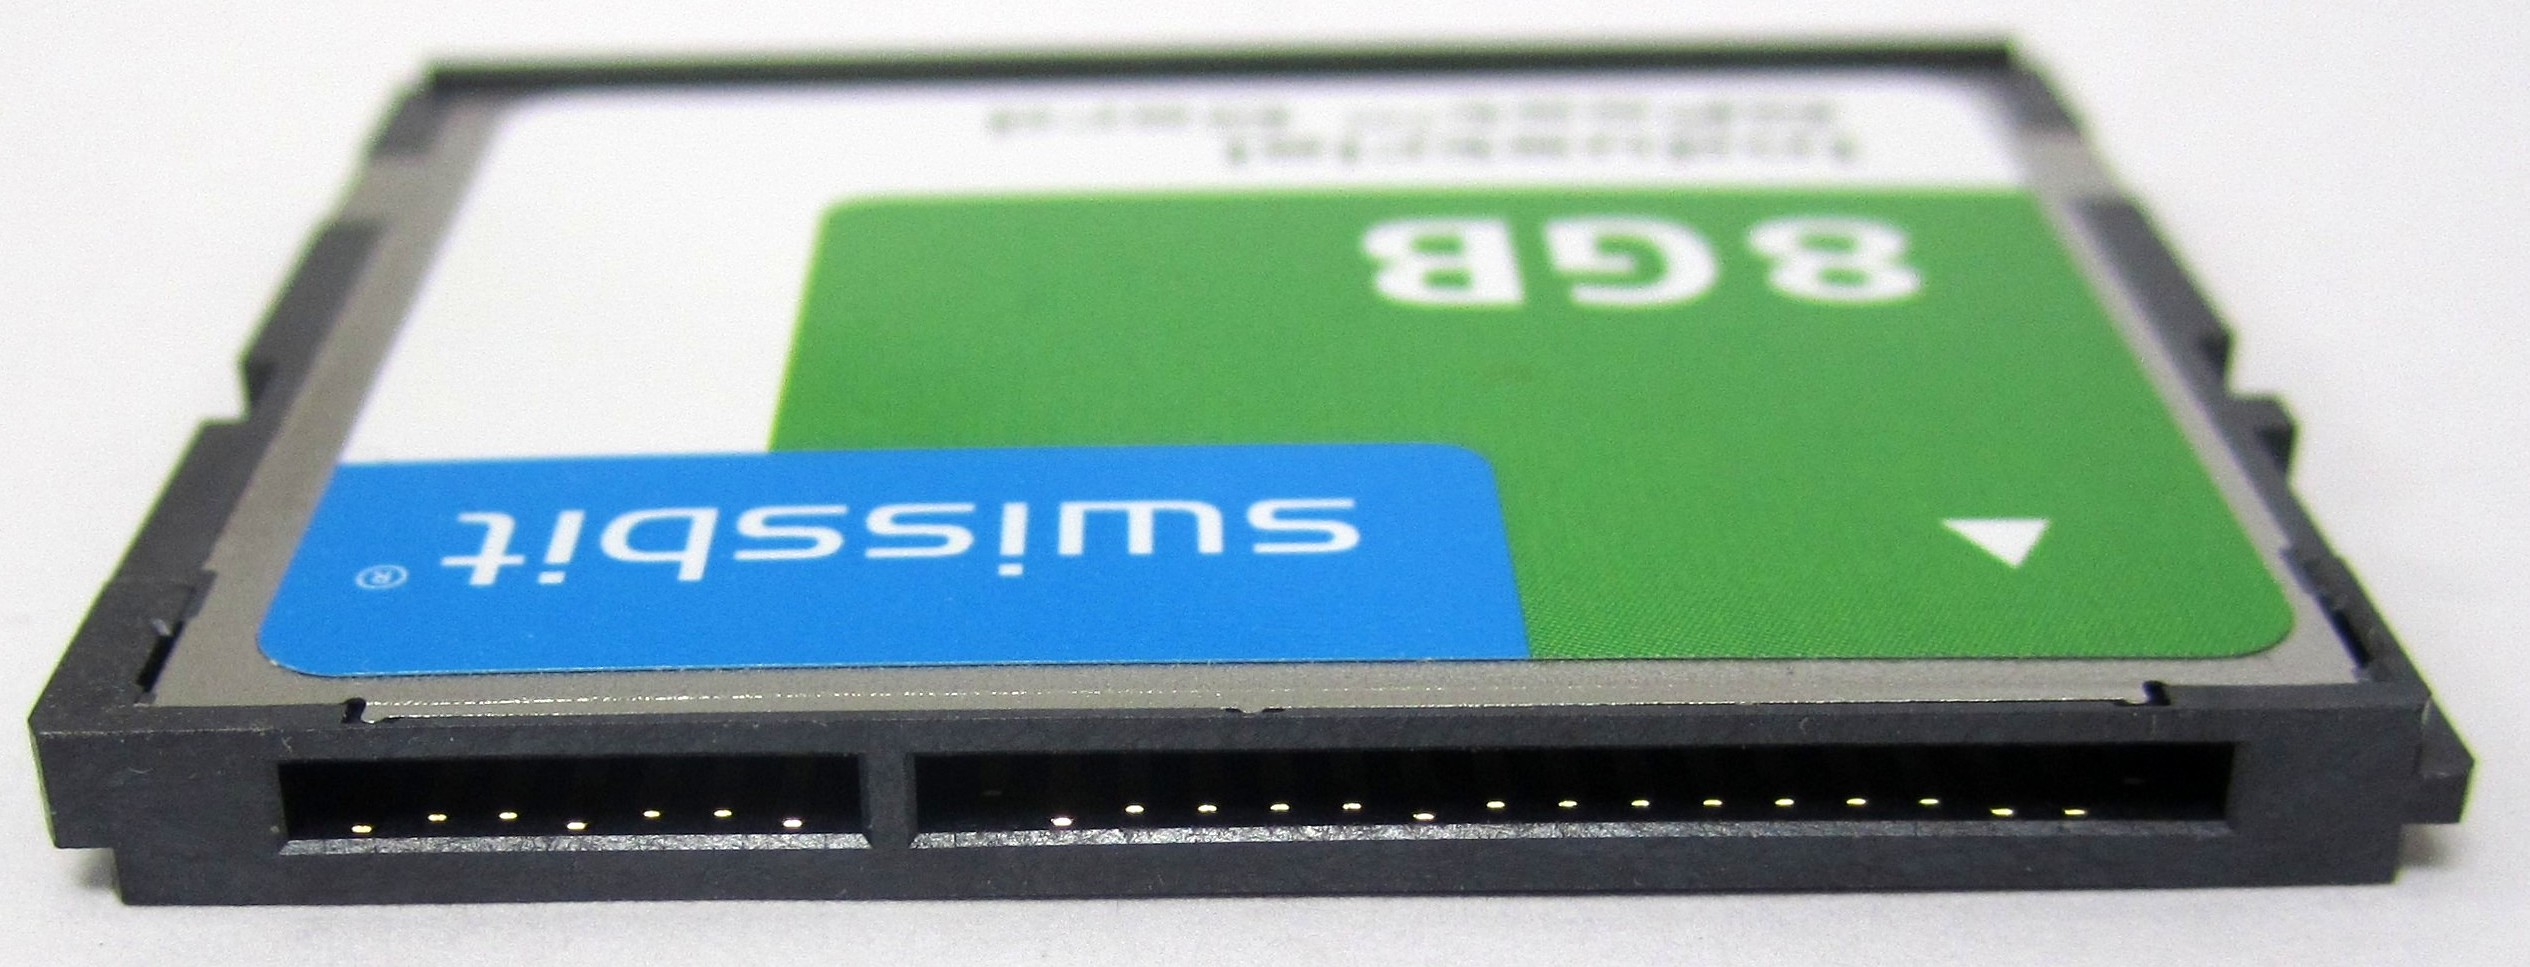 USB Memory Card Reader SMARTMEDIA COMPACTFLASH USB 1.1